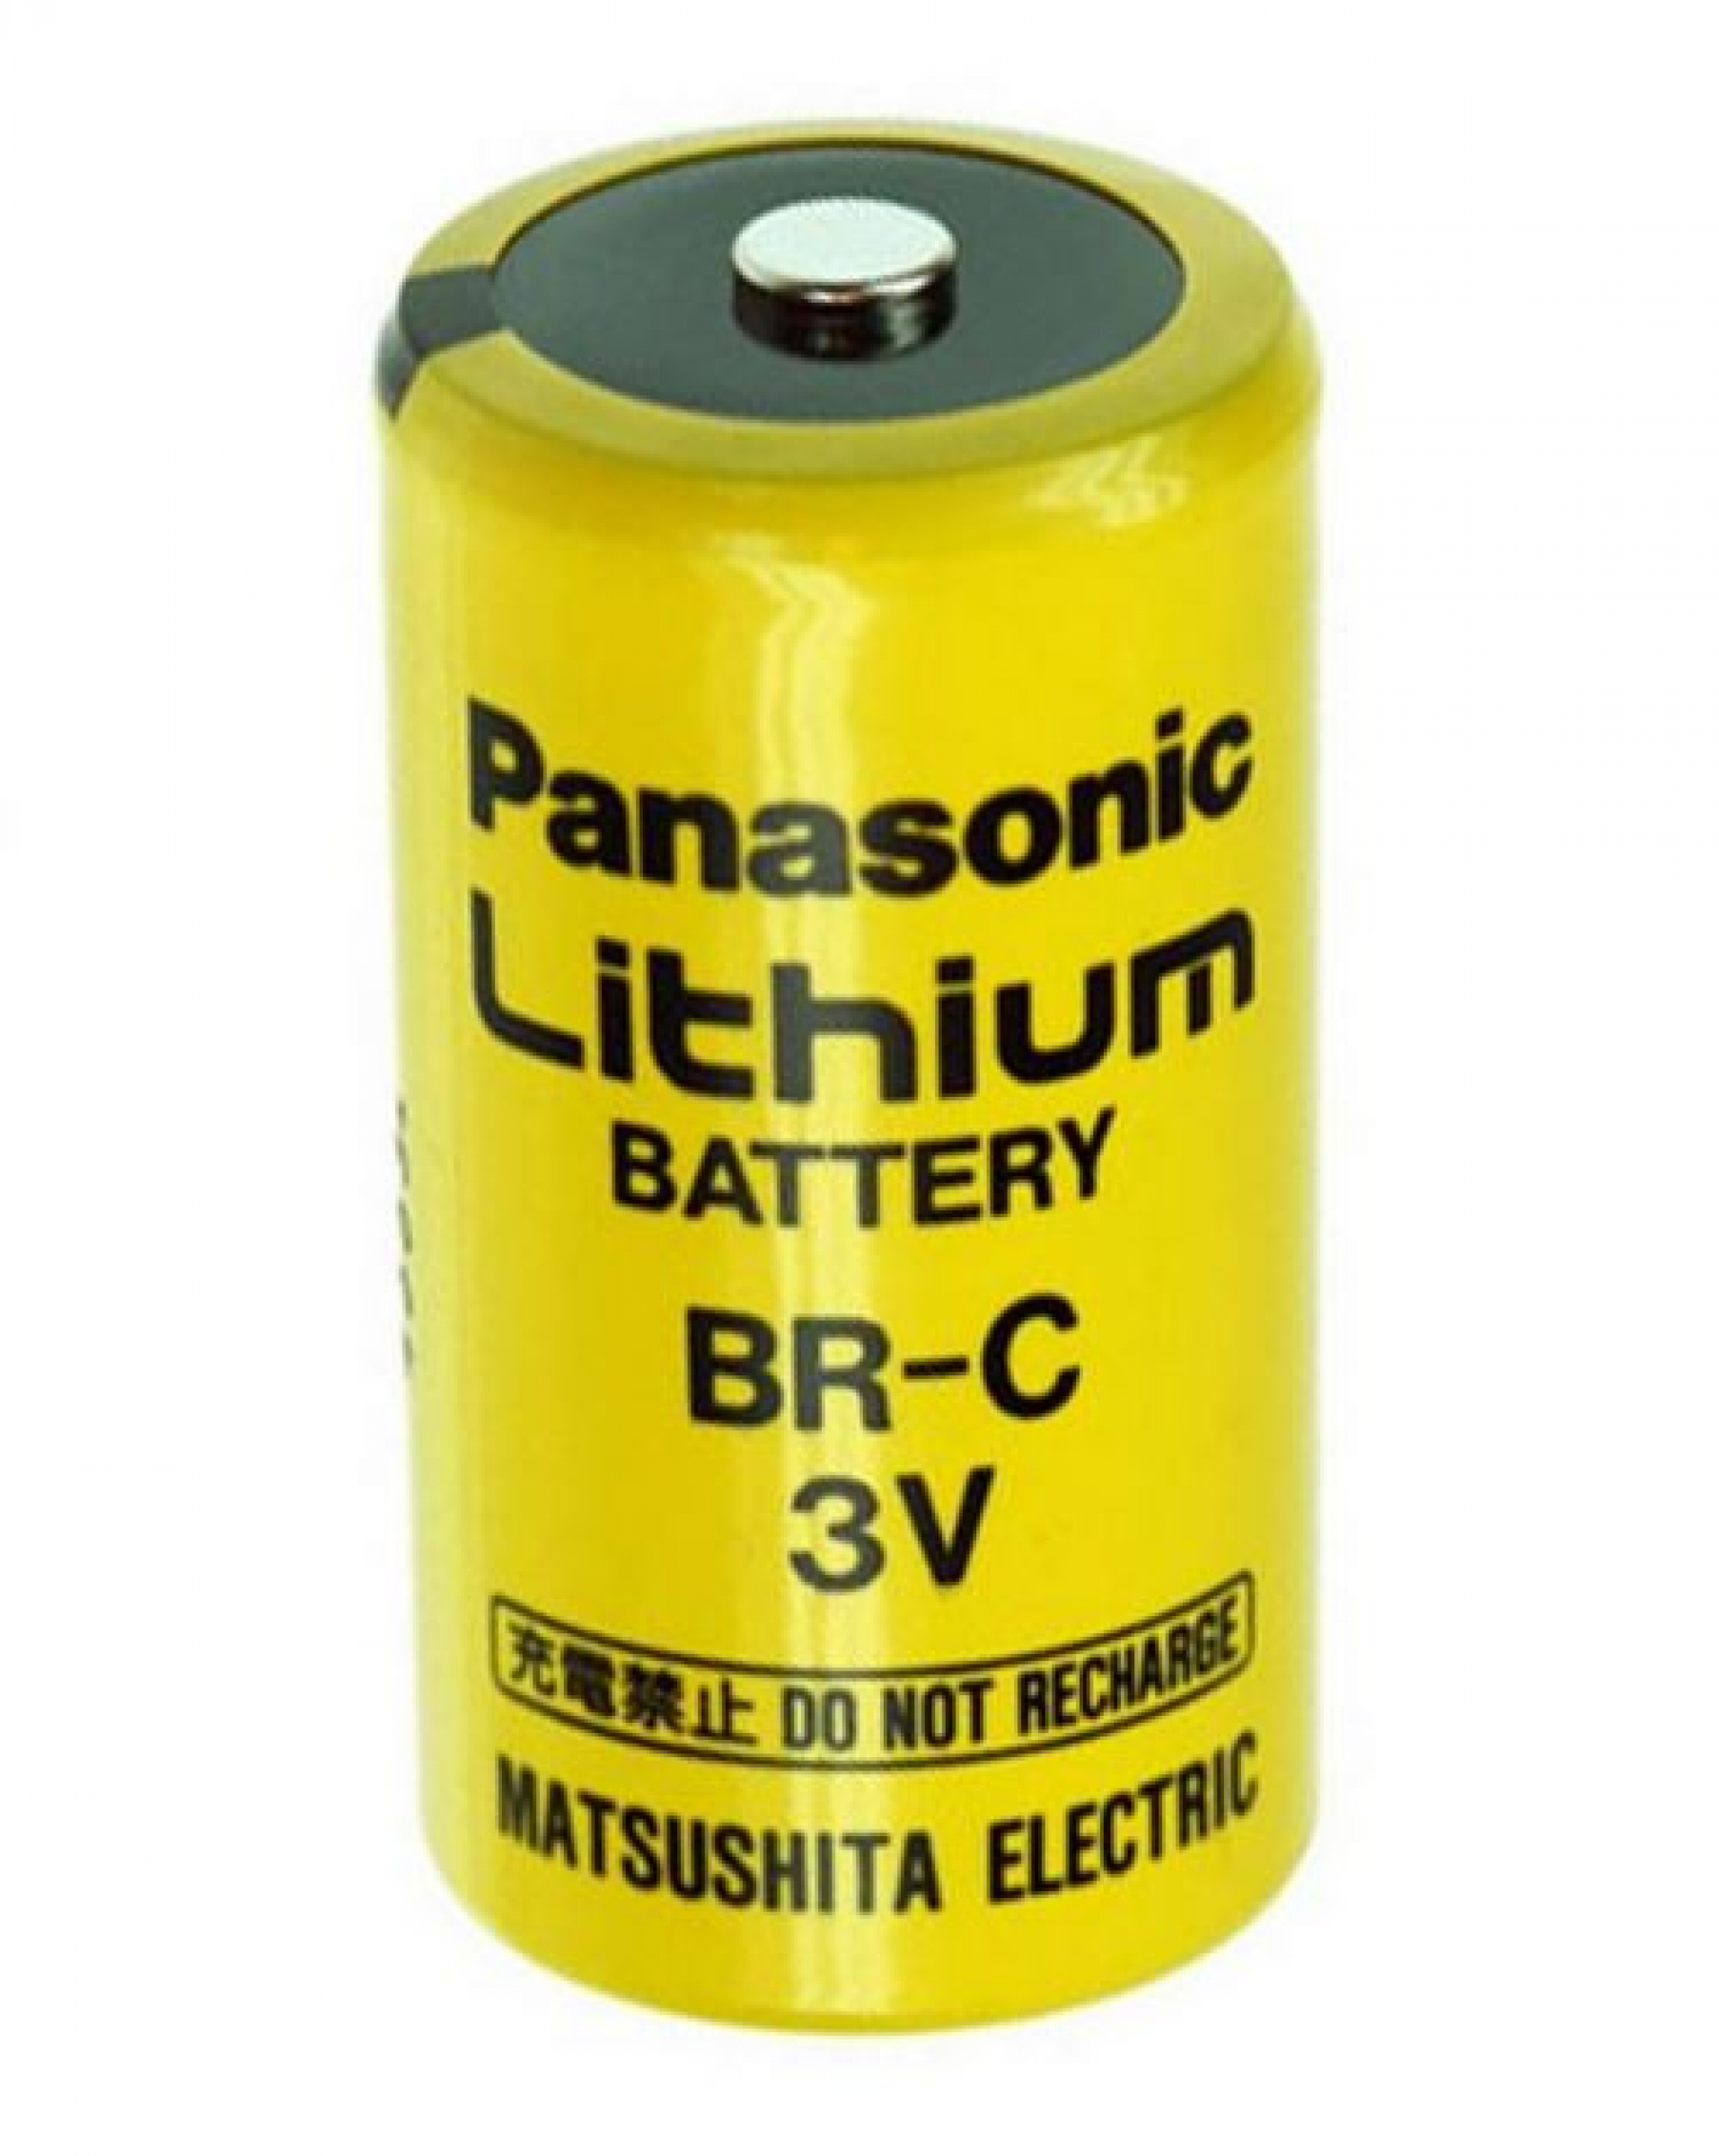 Panasonic Lithium BR-C BR26500